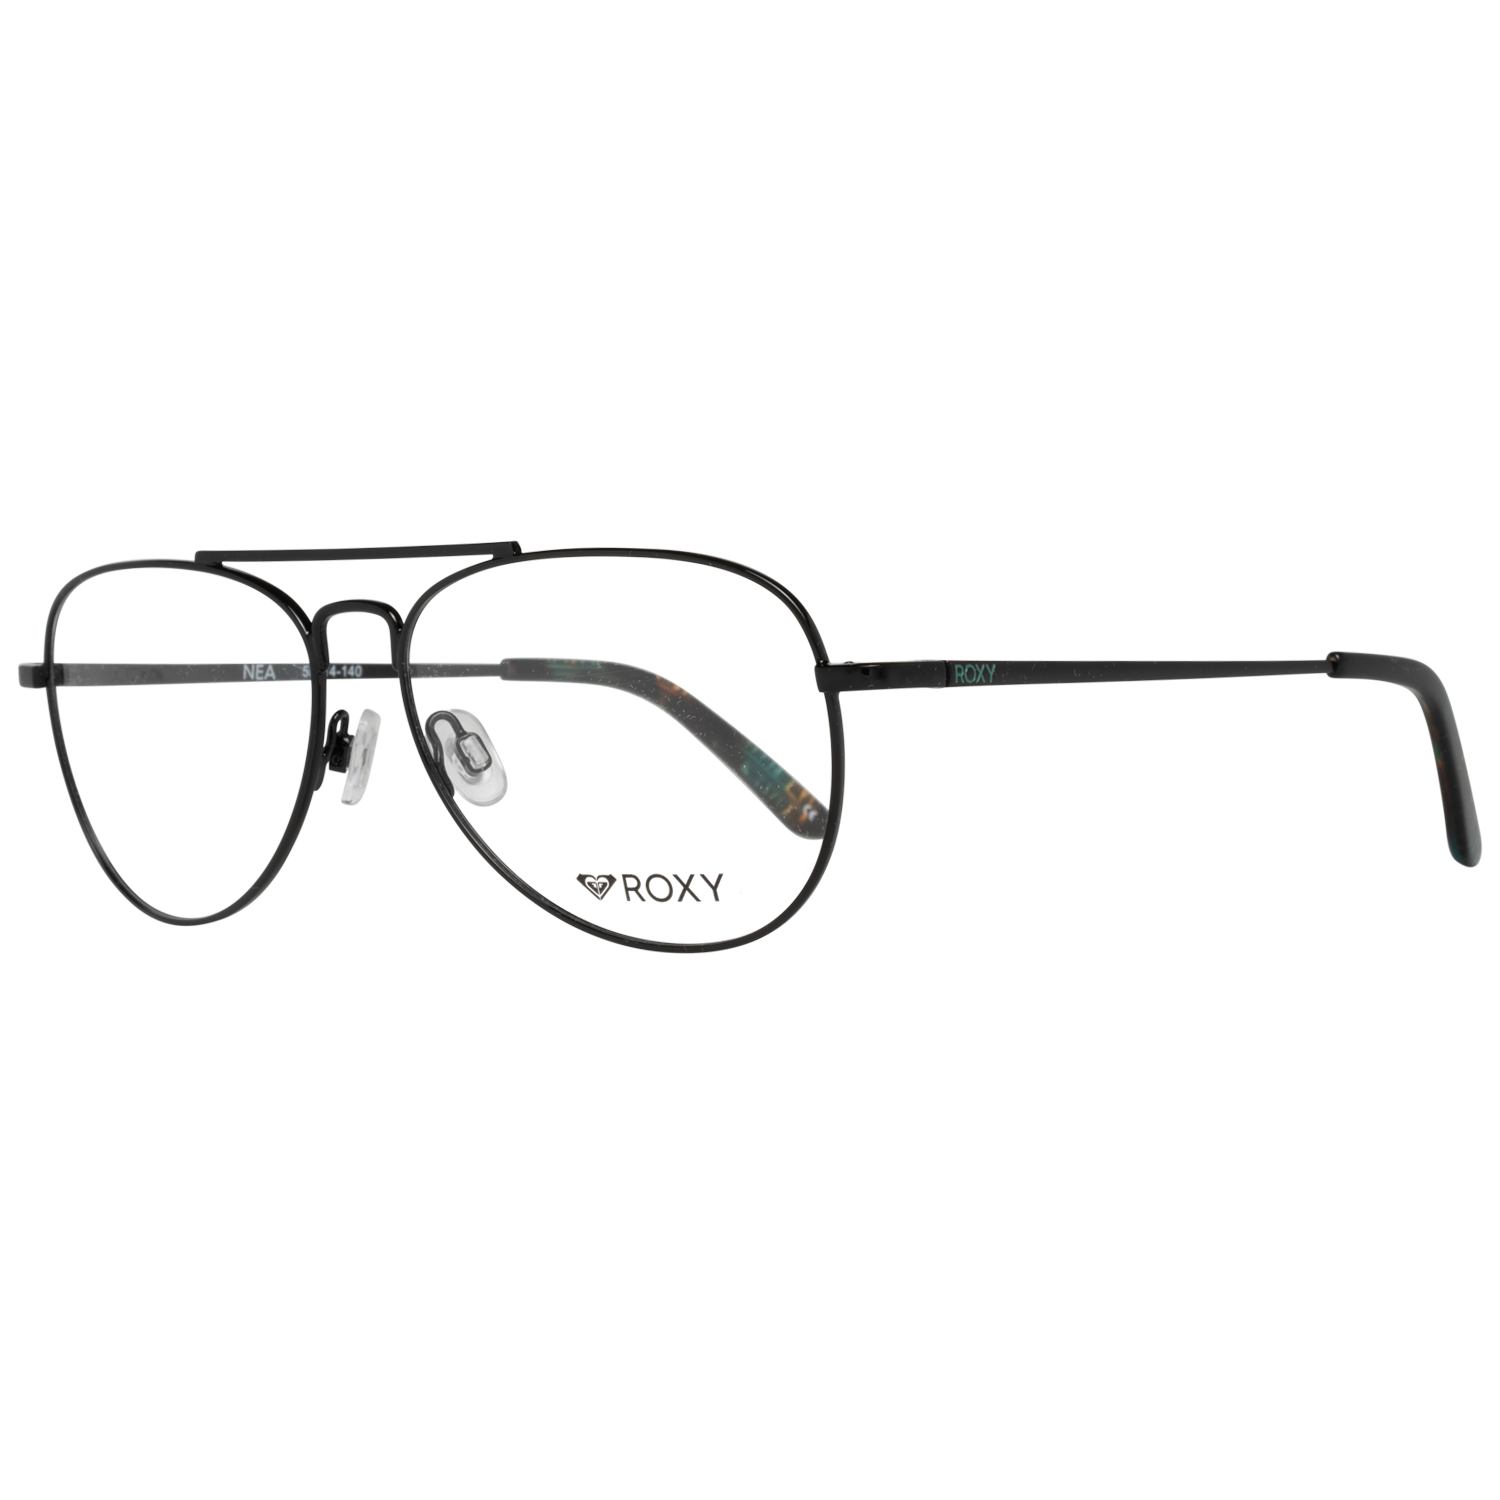 Roxy Frames Roxy Glasses Optical Frame ERJEG03043 DBLK 55 Eyeglasses Eyewear UK USA Australia 